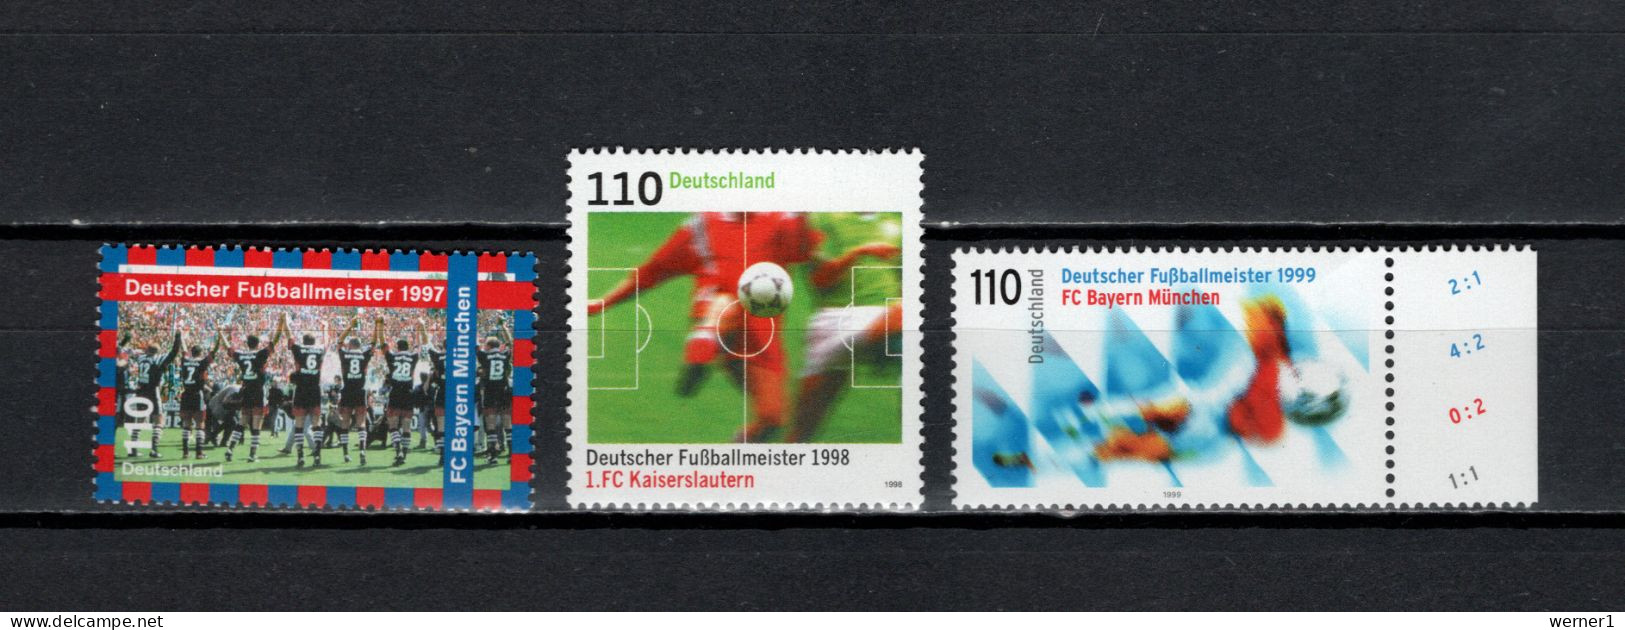 Germany 1997/1999 Football Soccer, FC Bayern München, 1.FC Kaiserslautern 3 Stamps MNH - Club Mitici